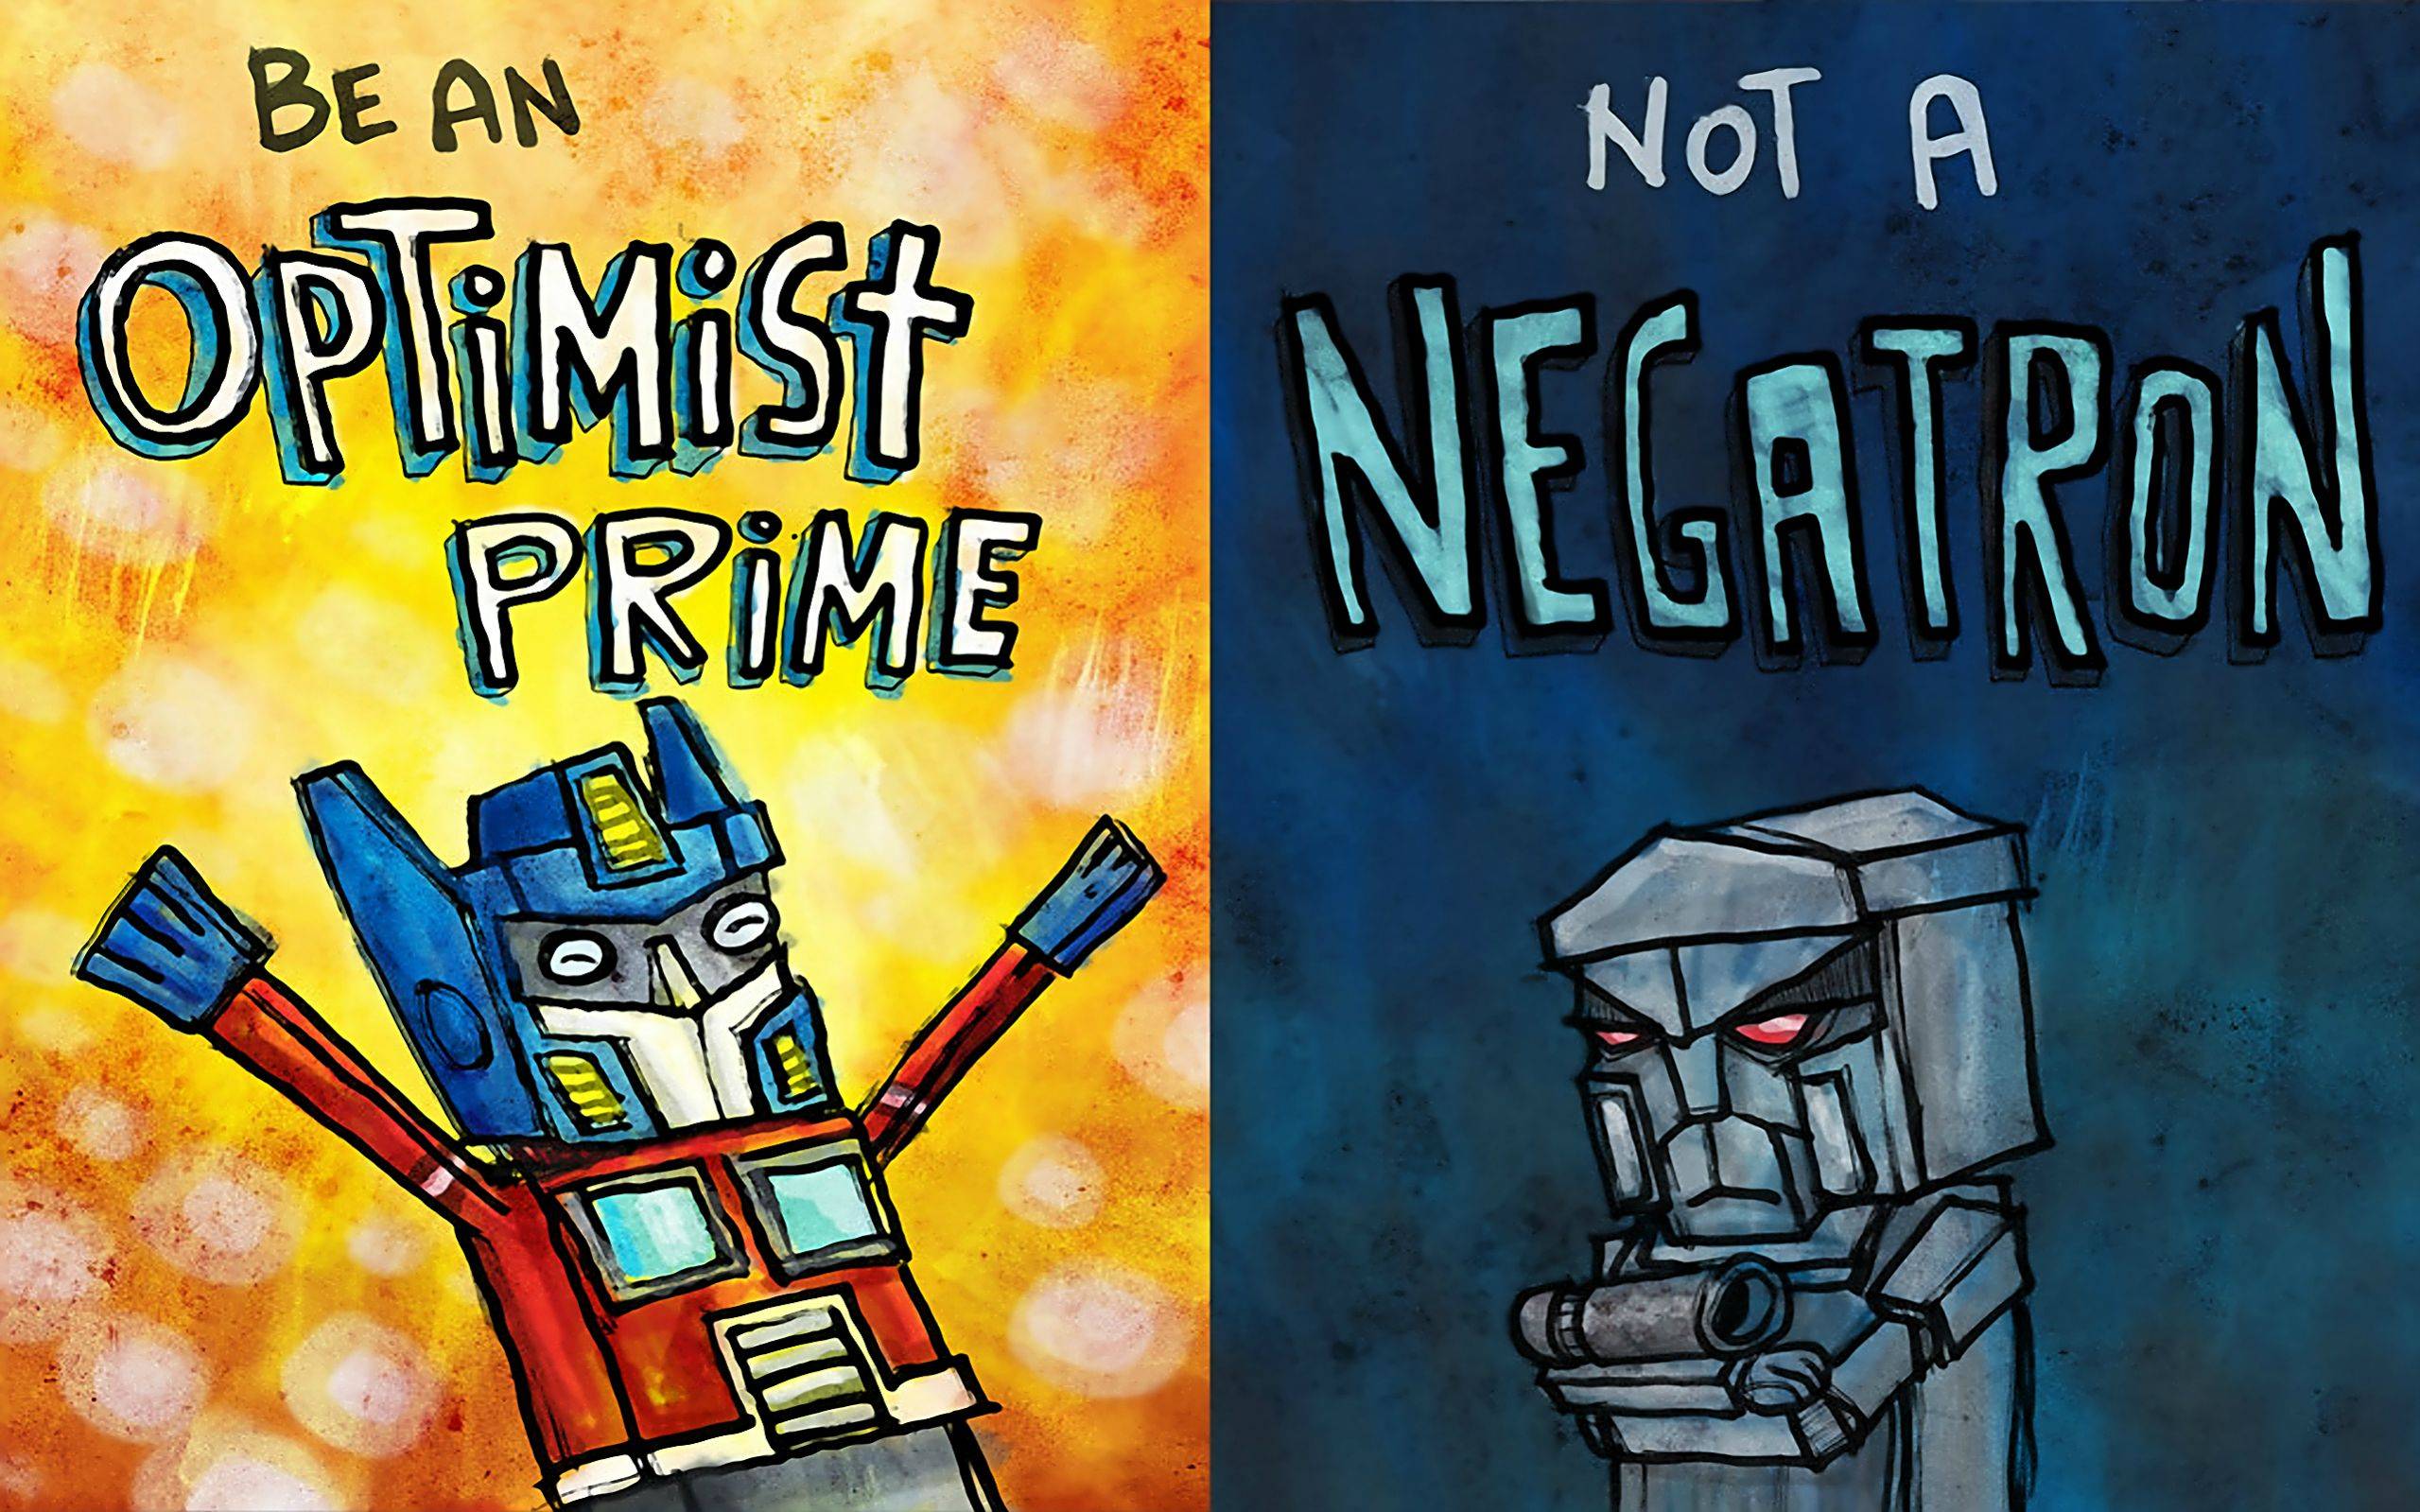 Be an optimist prime not a negatron [2560 x 1600]